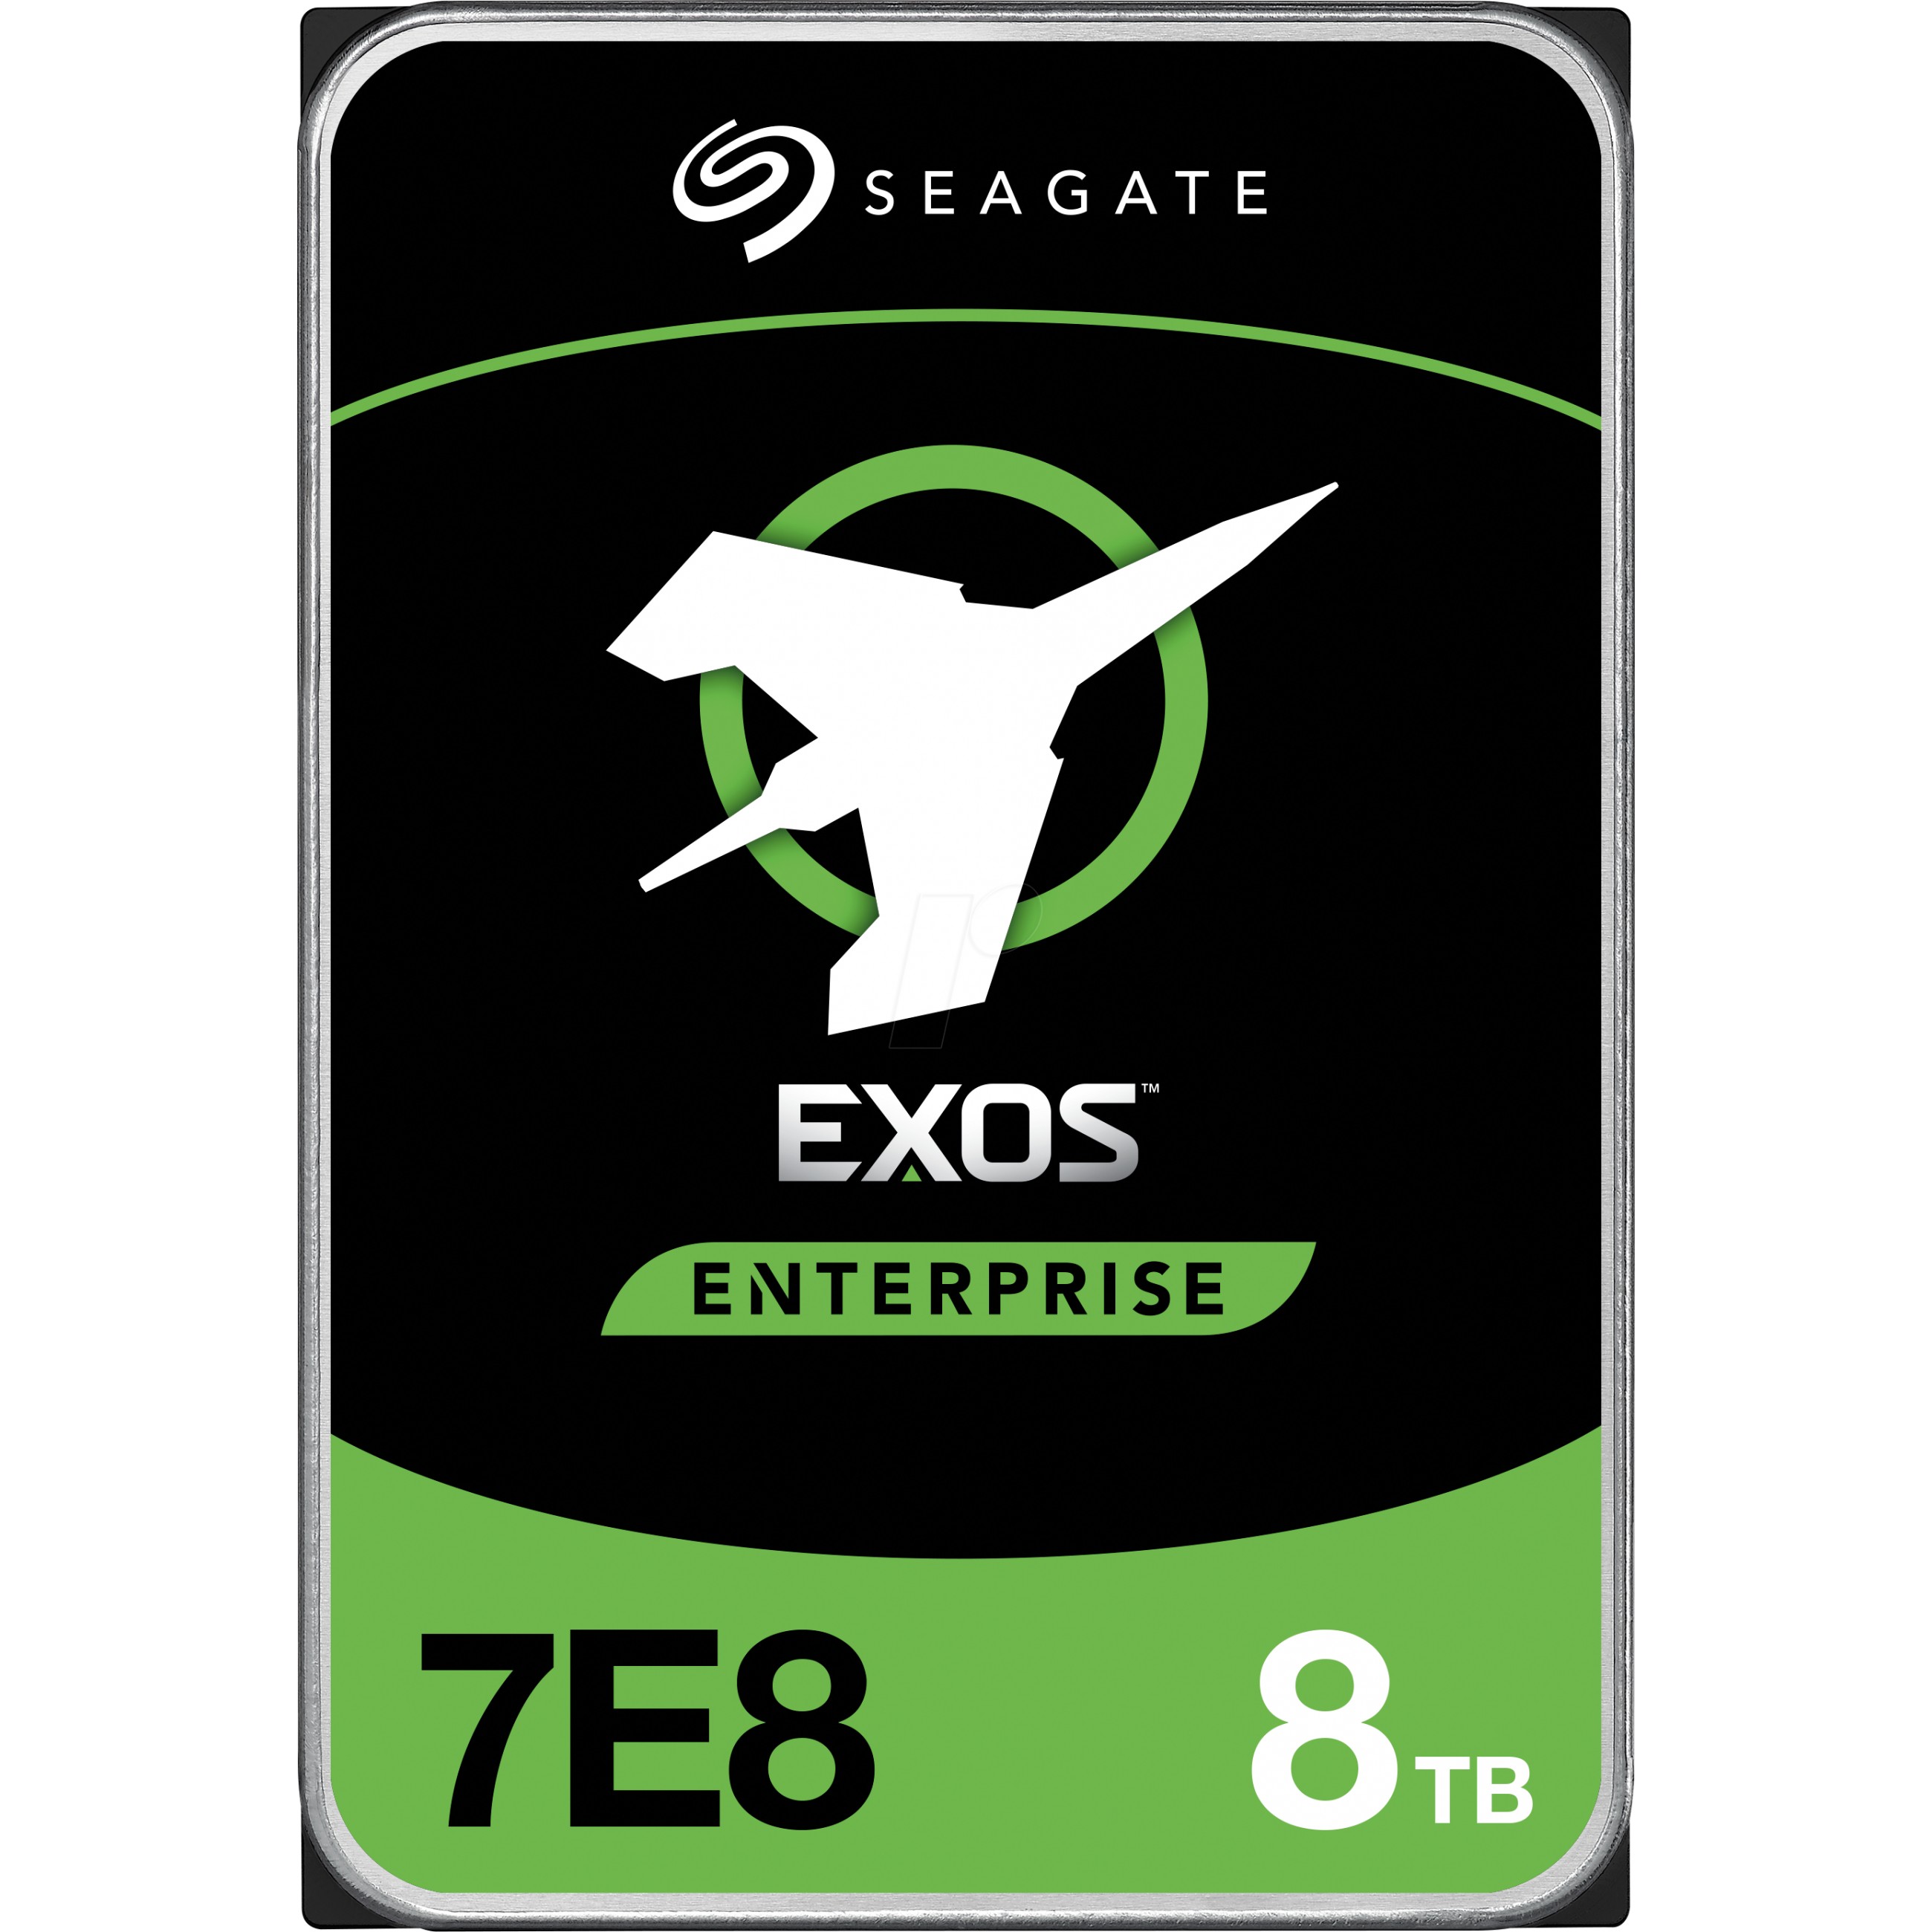 Seagate Enterprise ST8000NM000A internal hard drive - ST8000NM000A